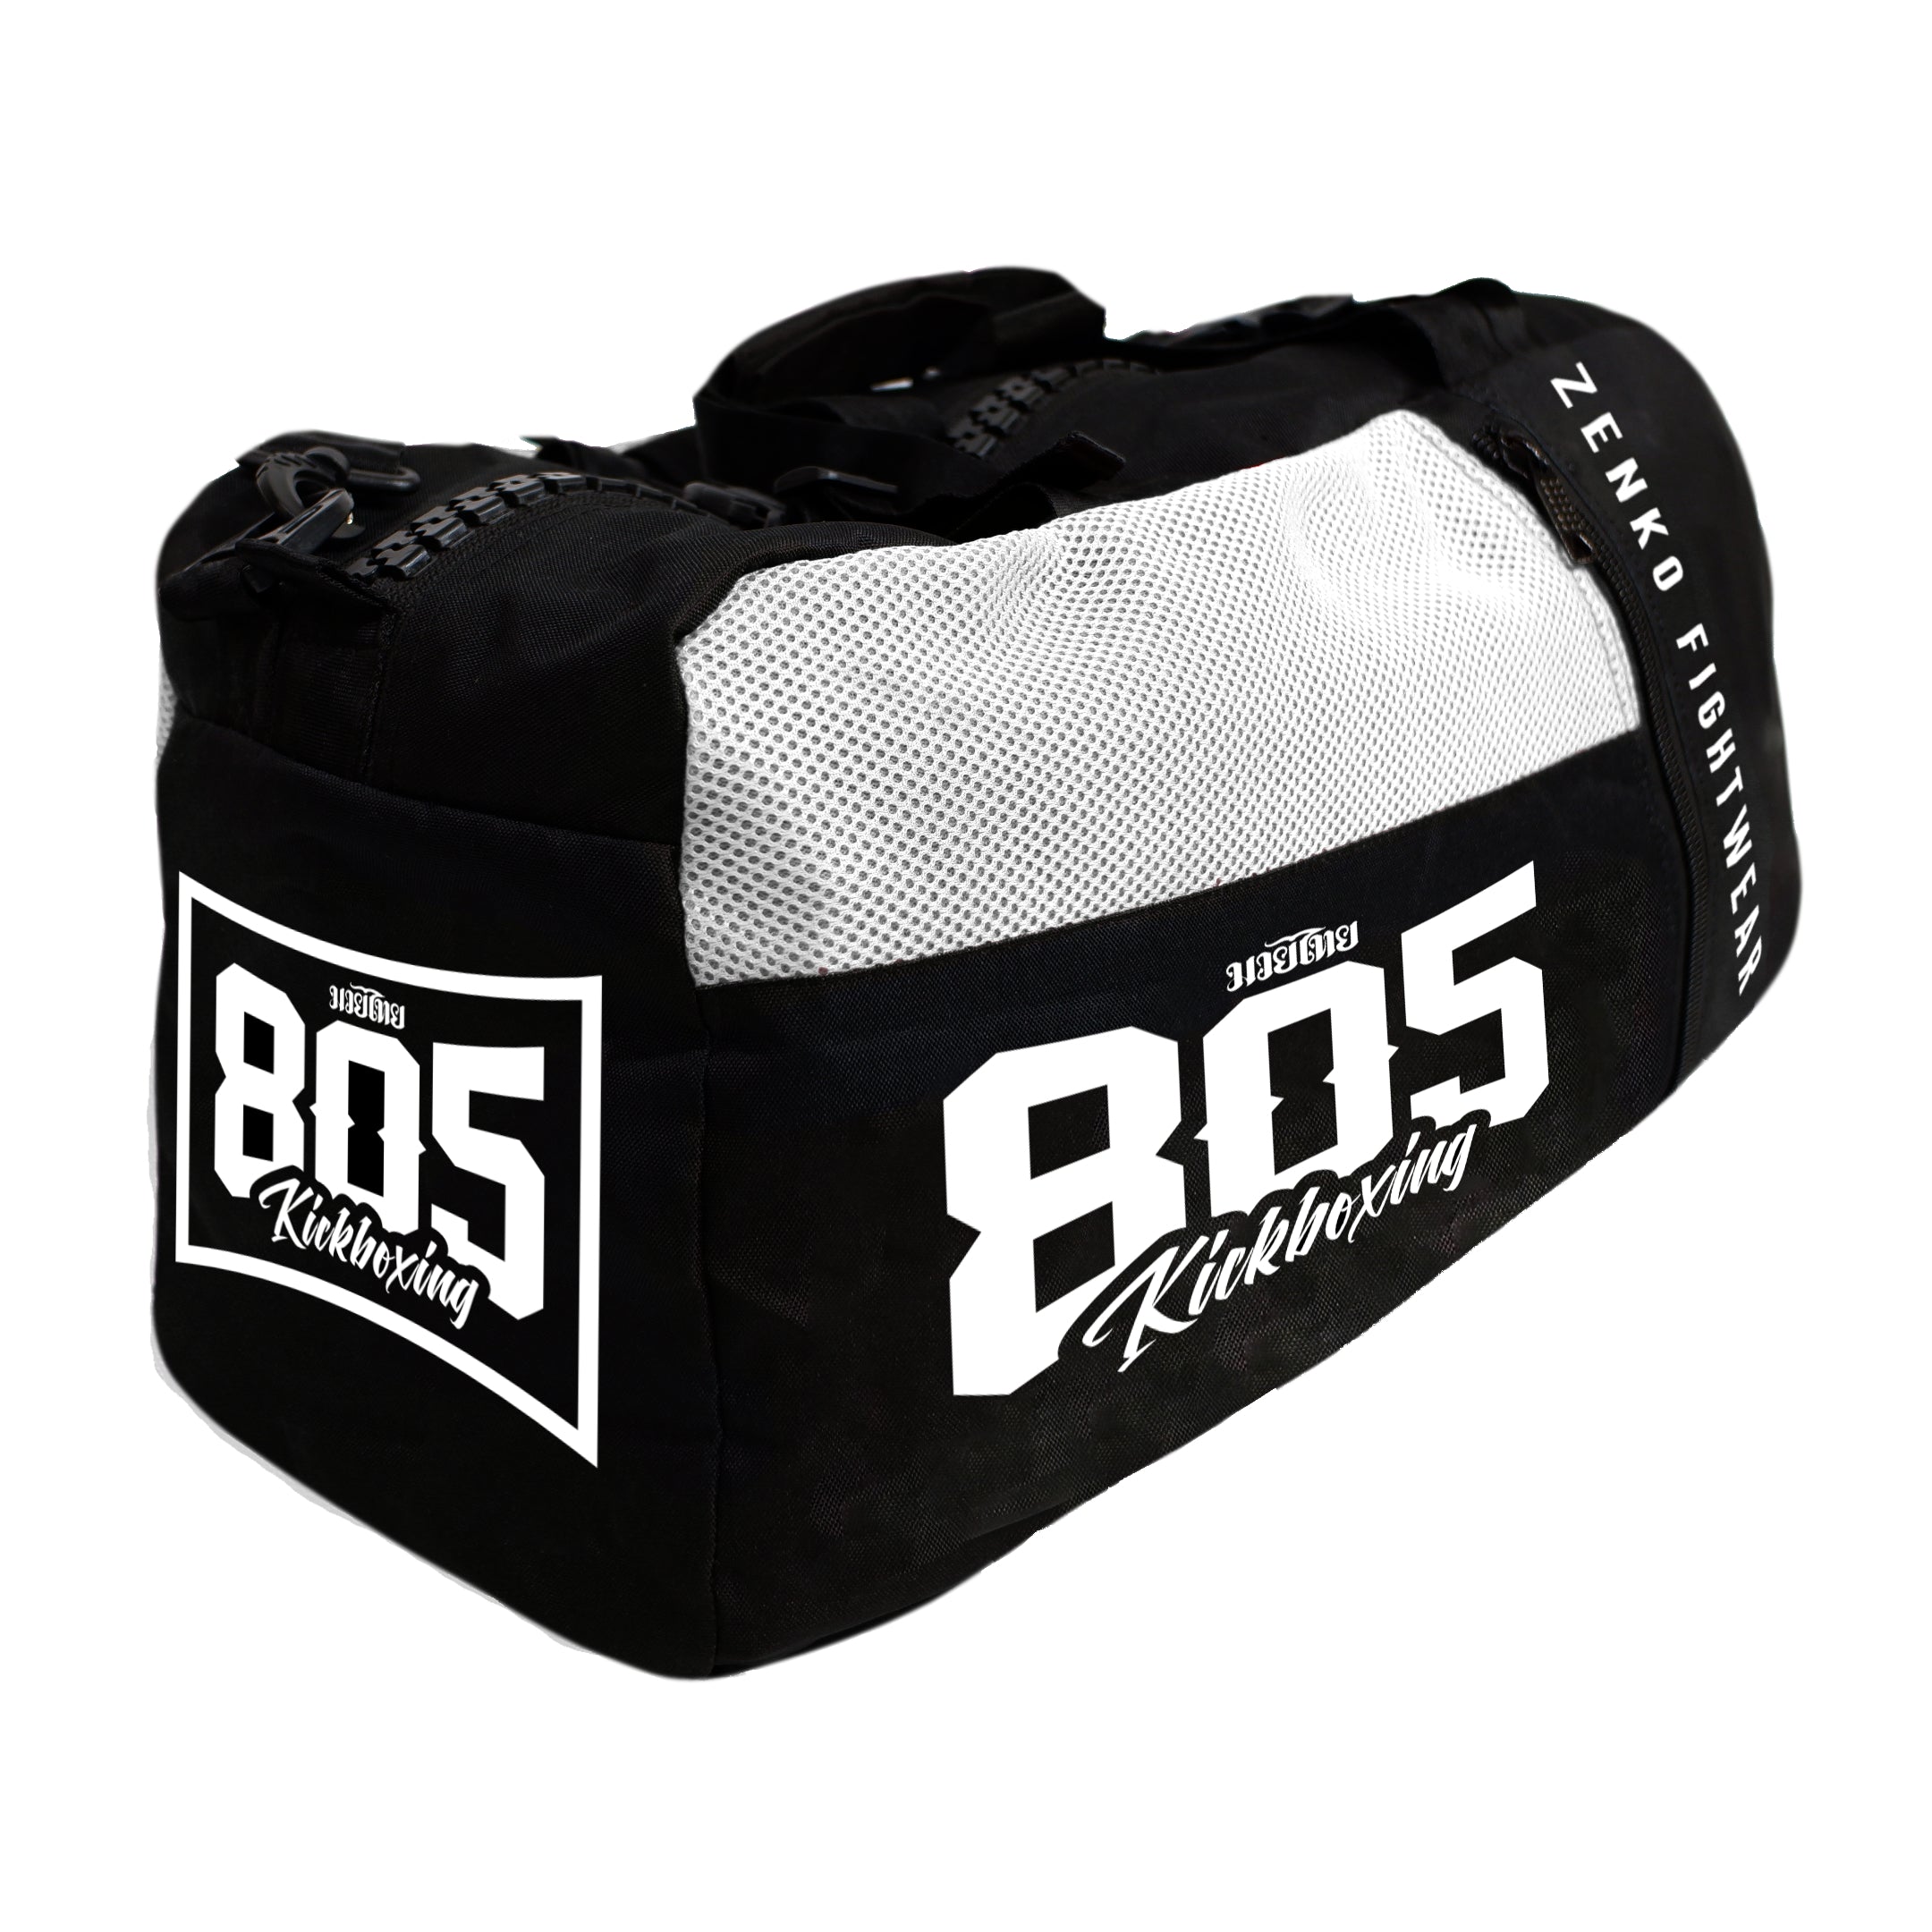 805 Kickboxing Gear Bag